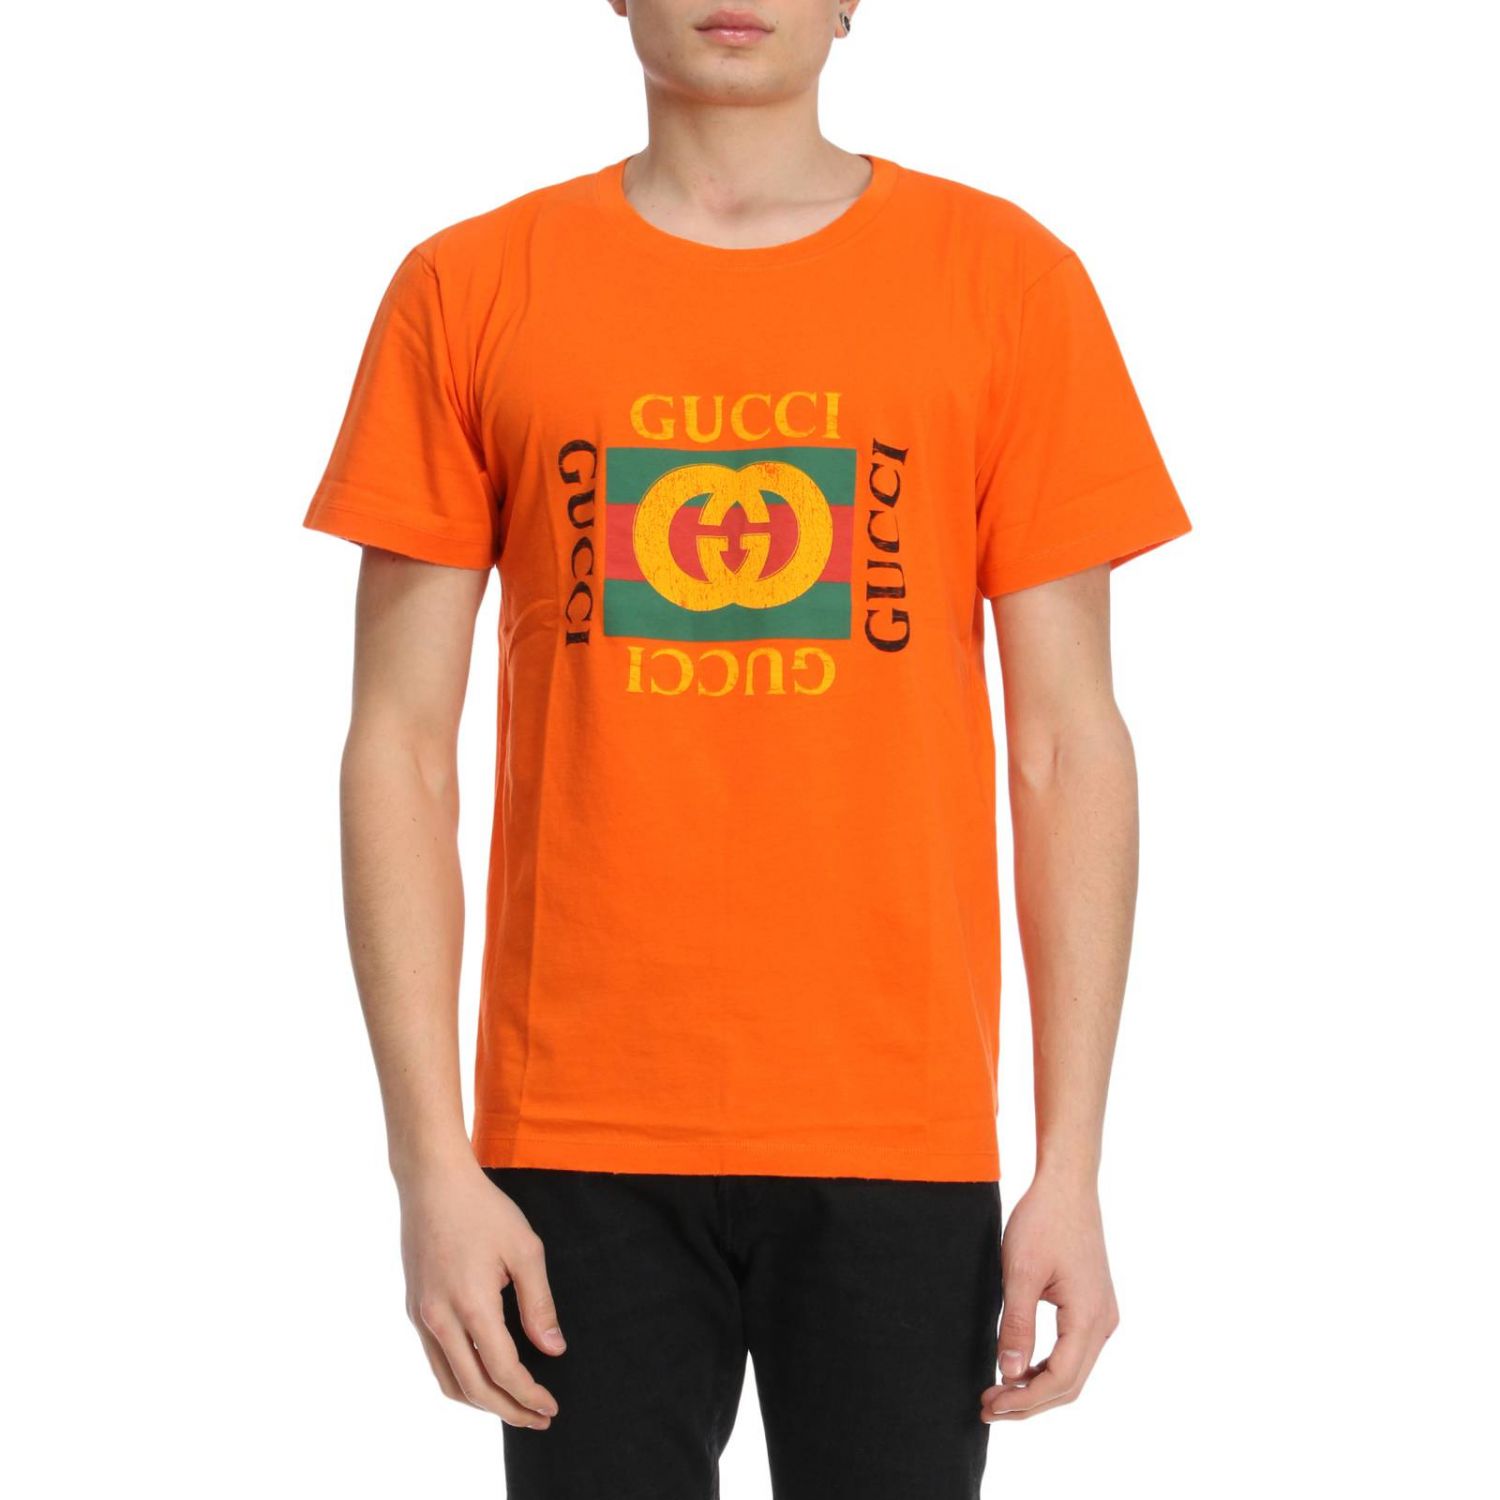 GUCCI: T-shirt men | T-Shirt Gucci Men Orange | T-Shirt Gucci 493117 ...